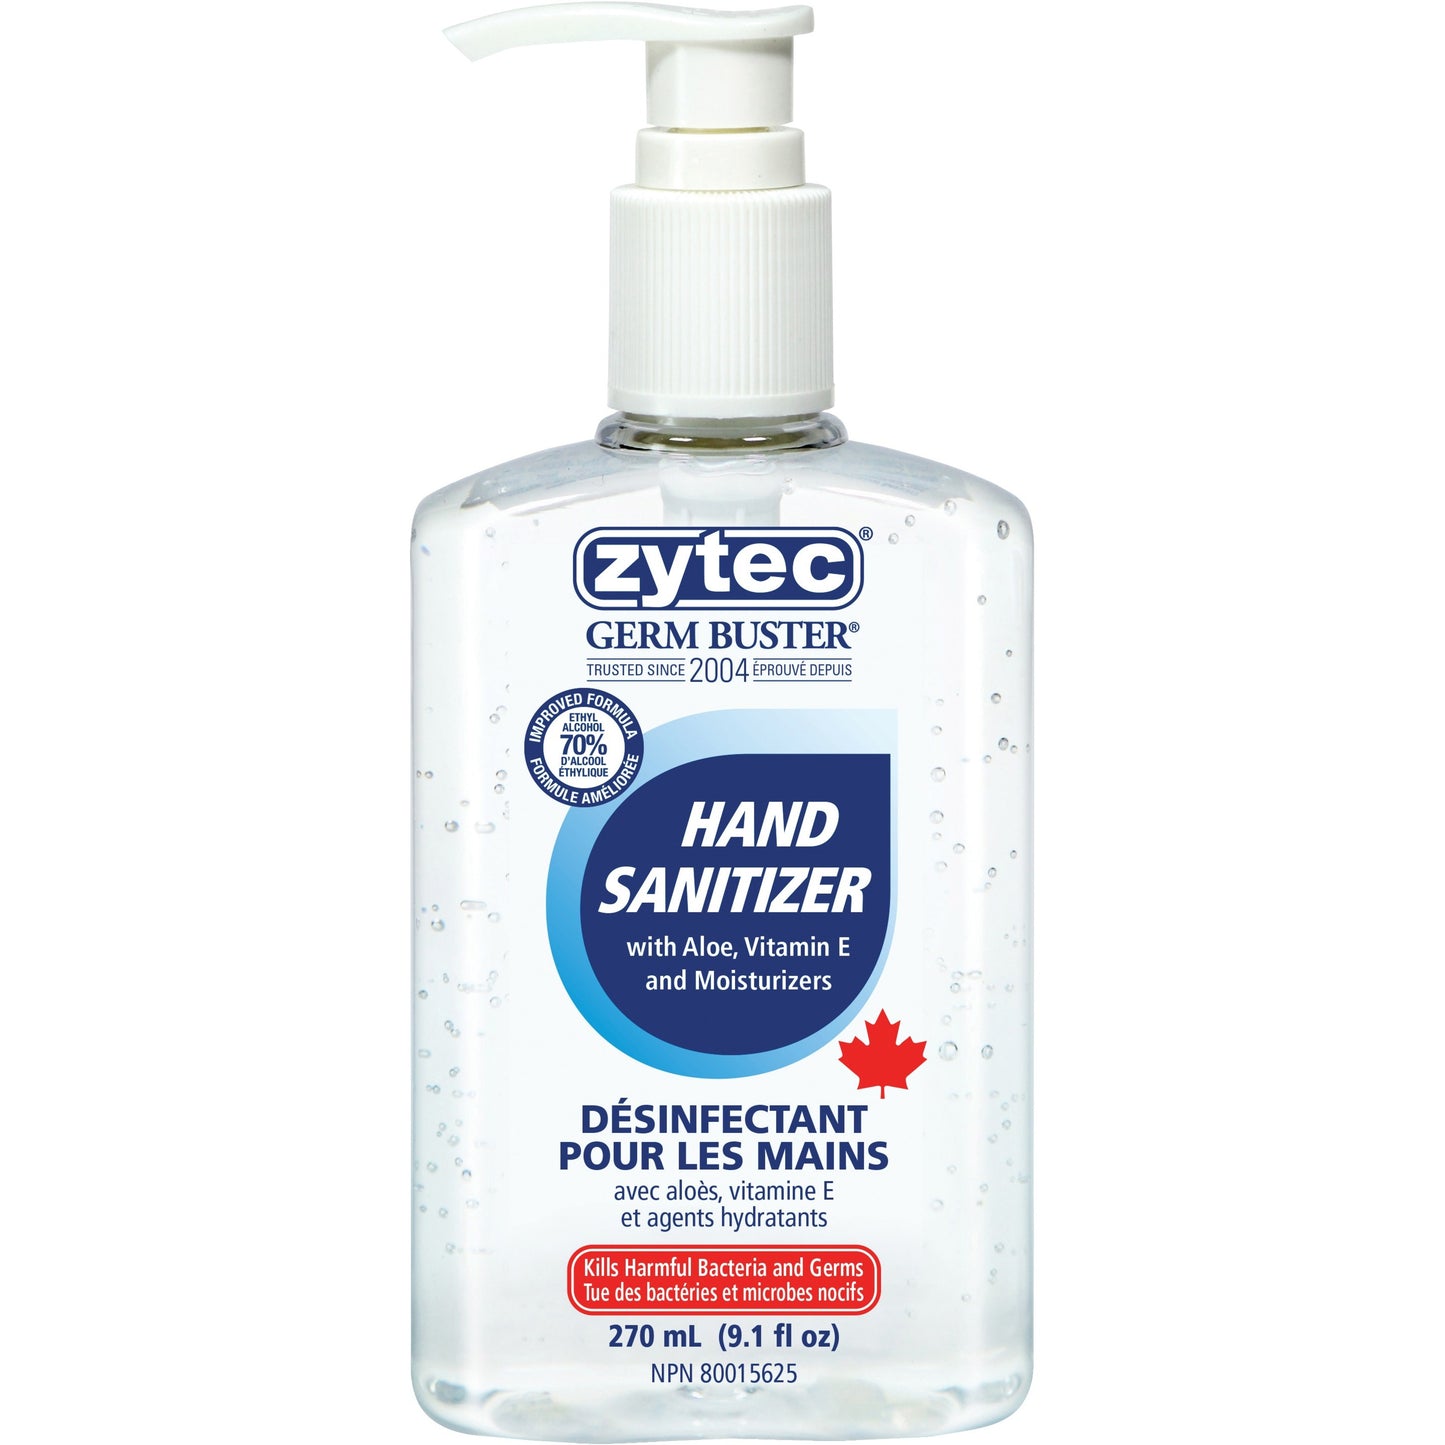 Zytec Germ Buster Sanitizing Gel - 270 mL - Pump Bottle Dispenser - Kill Germs, Bacteria Remover - Hand - Clear - 1 Each